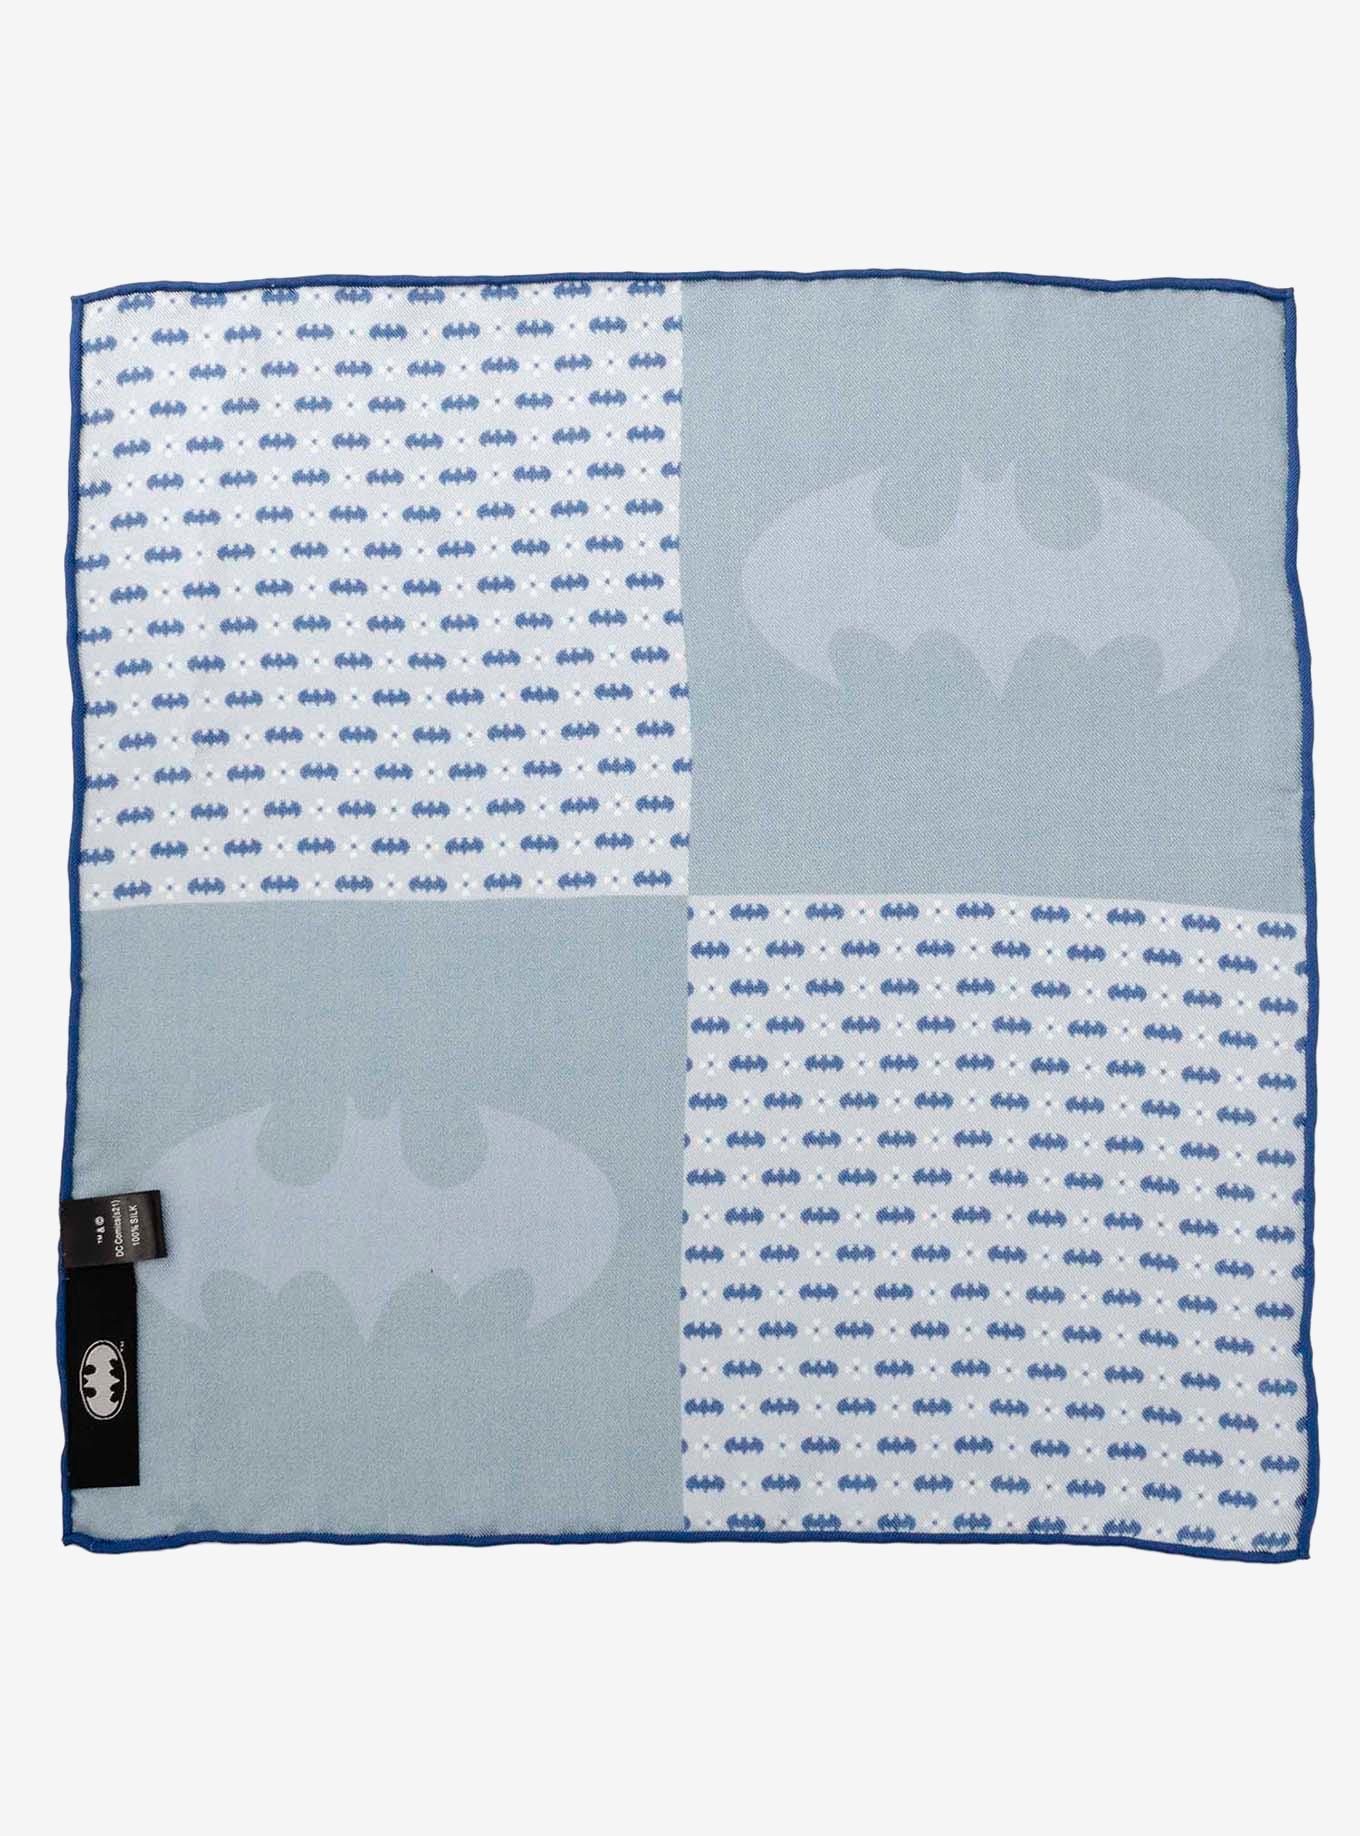 DC Comics Batman Multi Motif Blue Pocket Square, , alternate